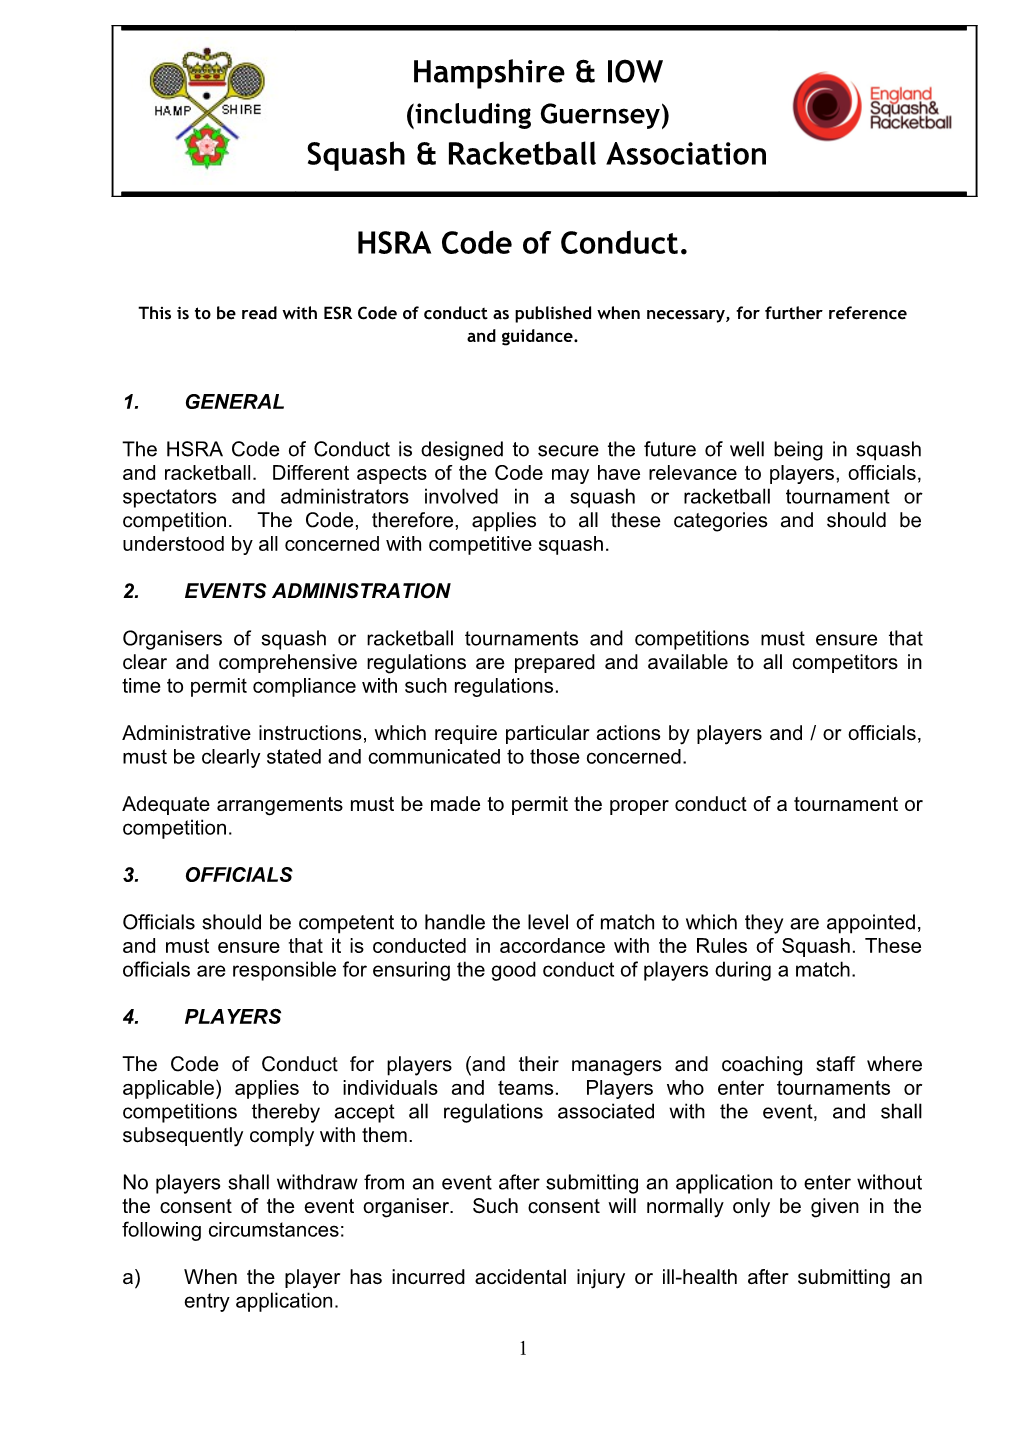 HSRA Code of Conduct